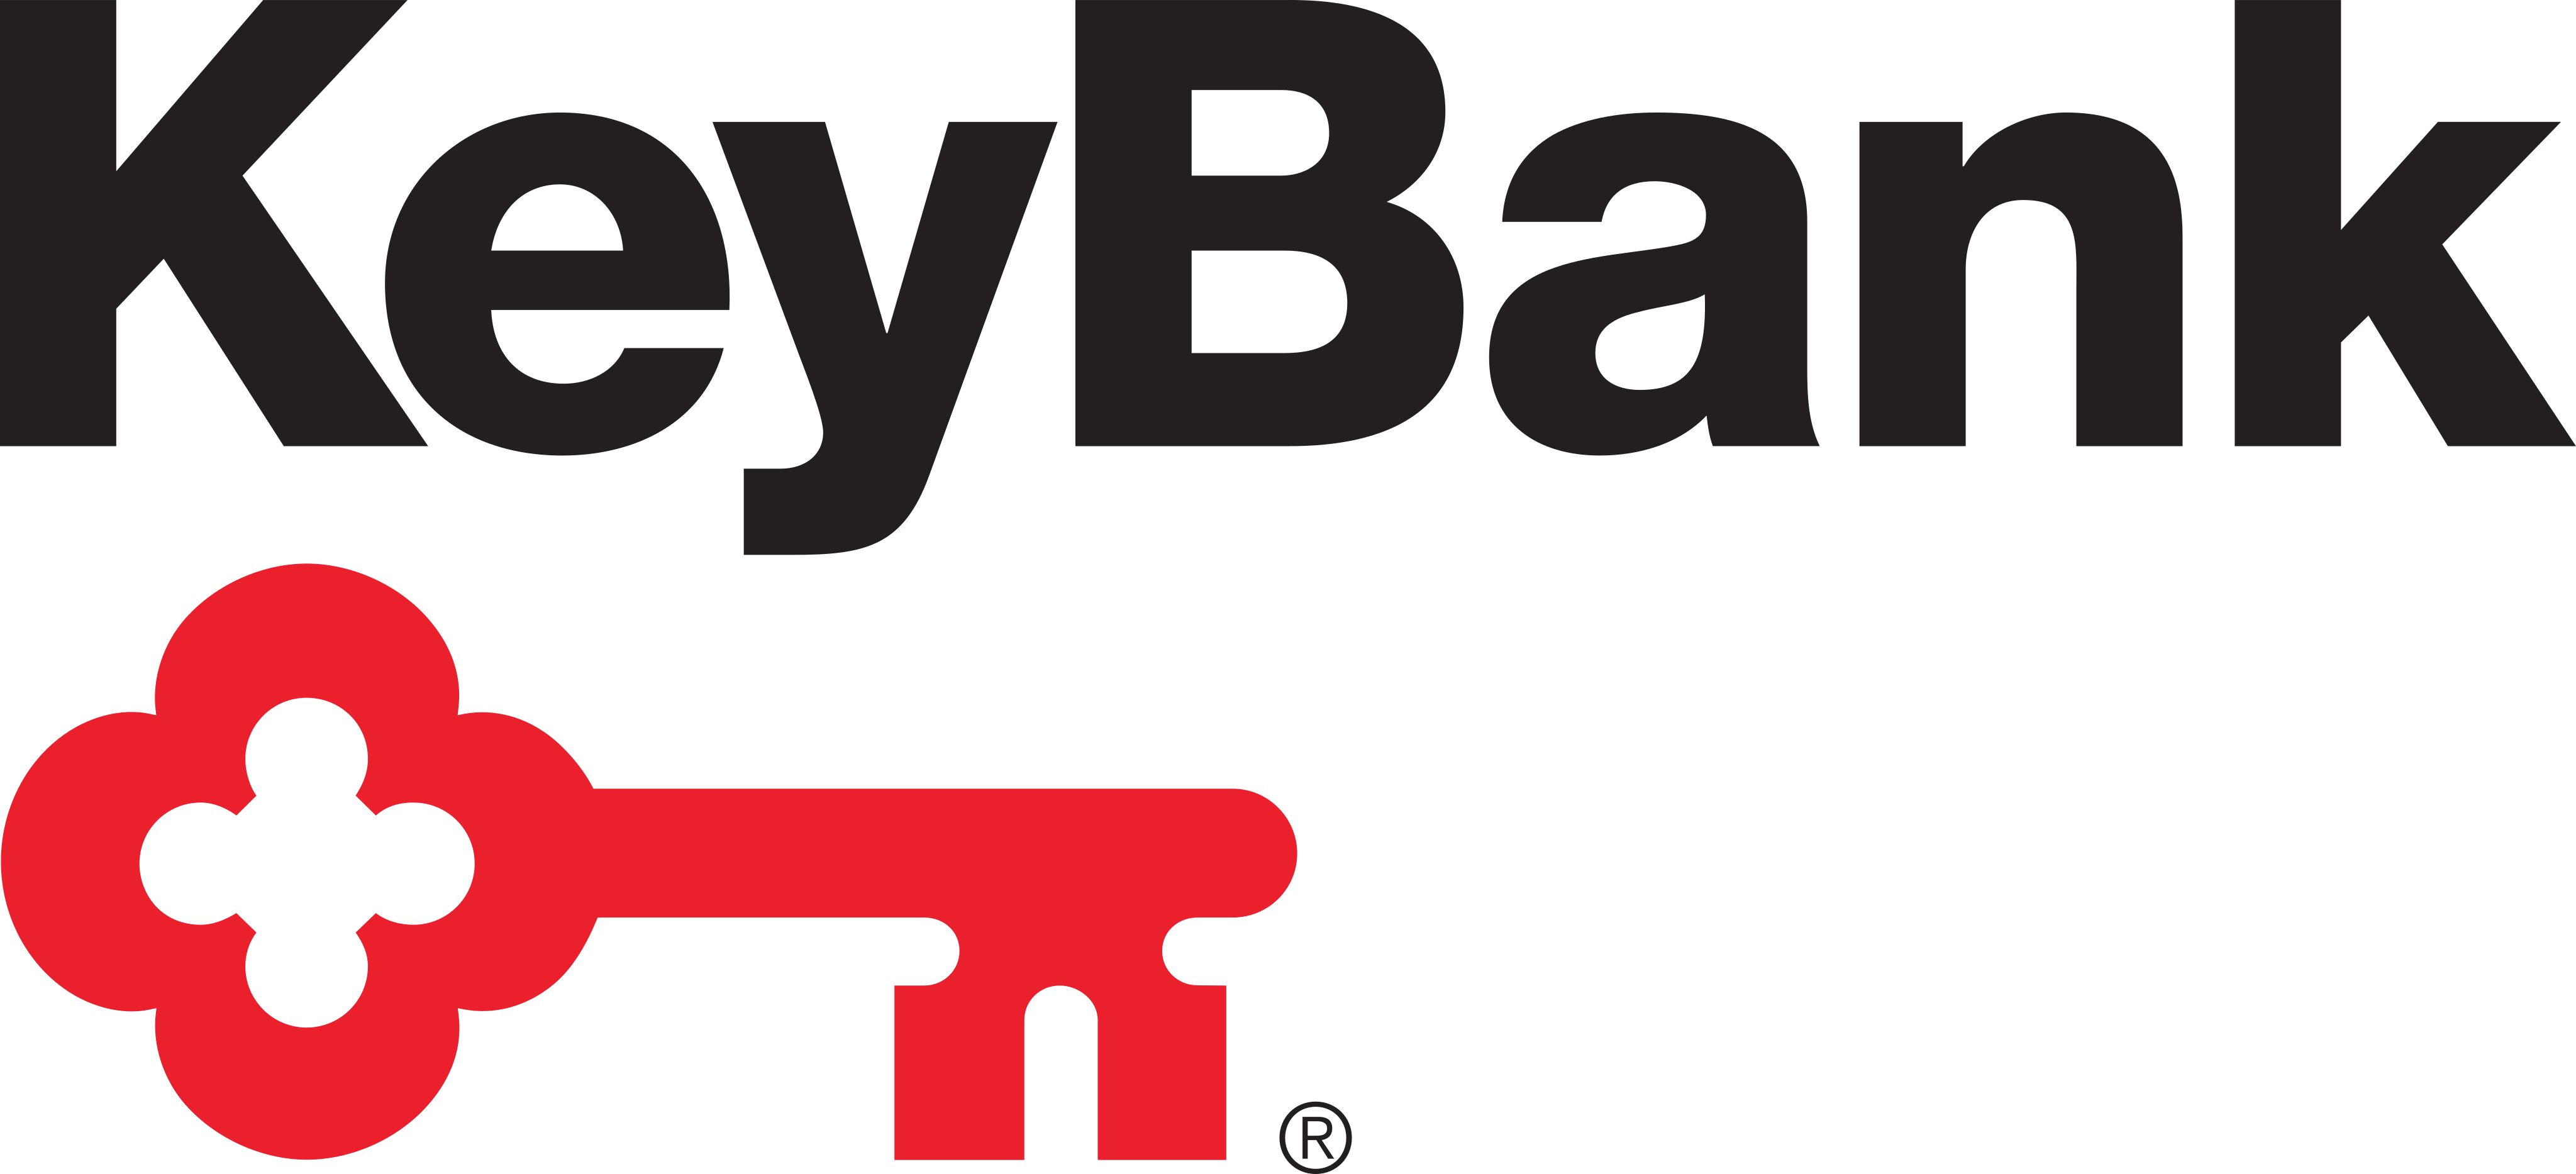 keybank logo 1 - KeyBank Logo